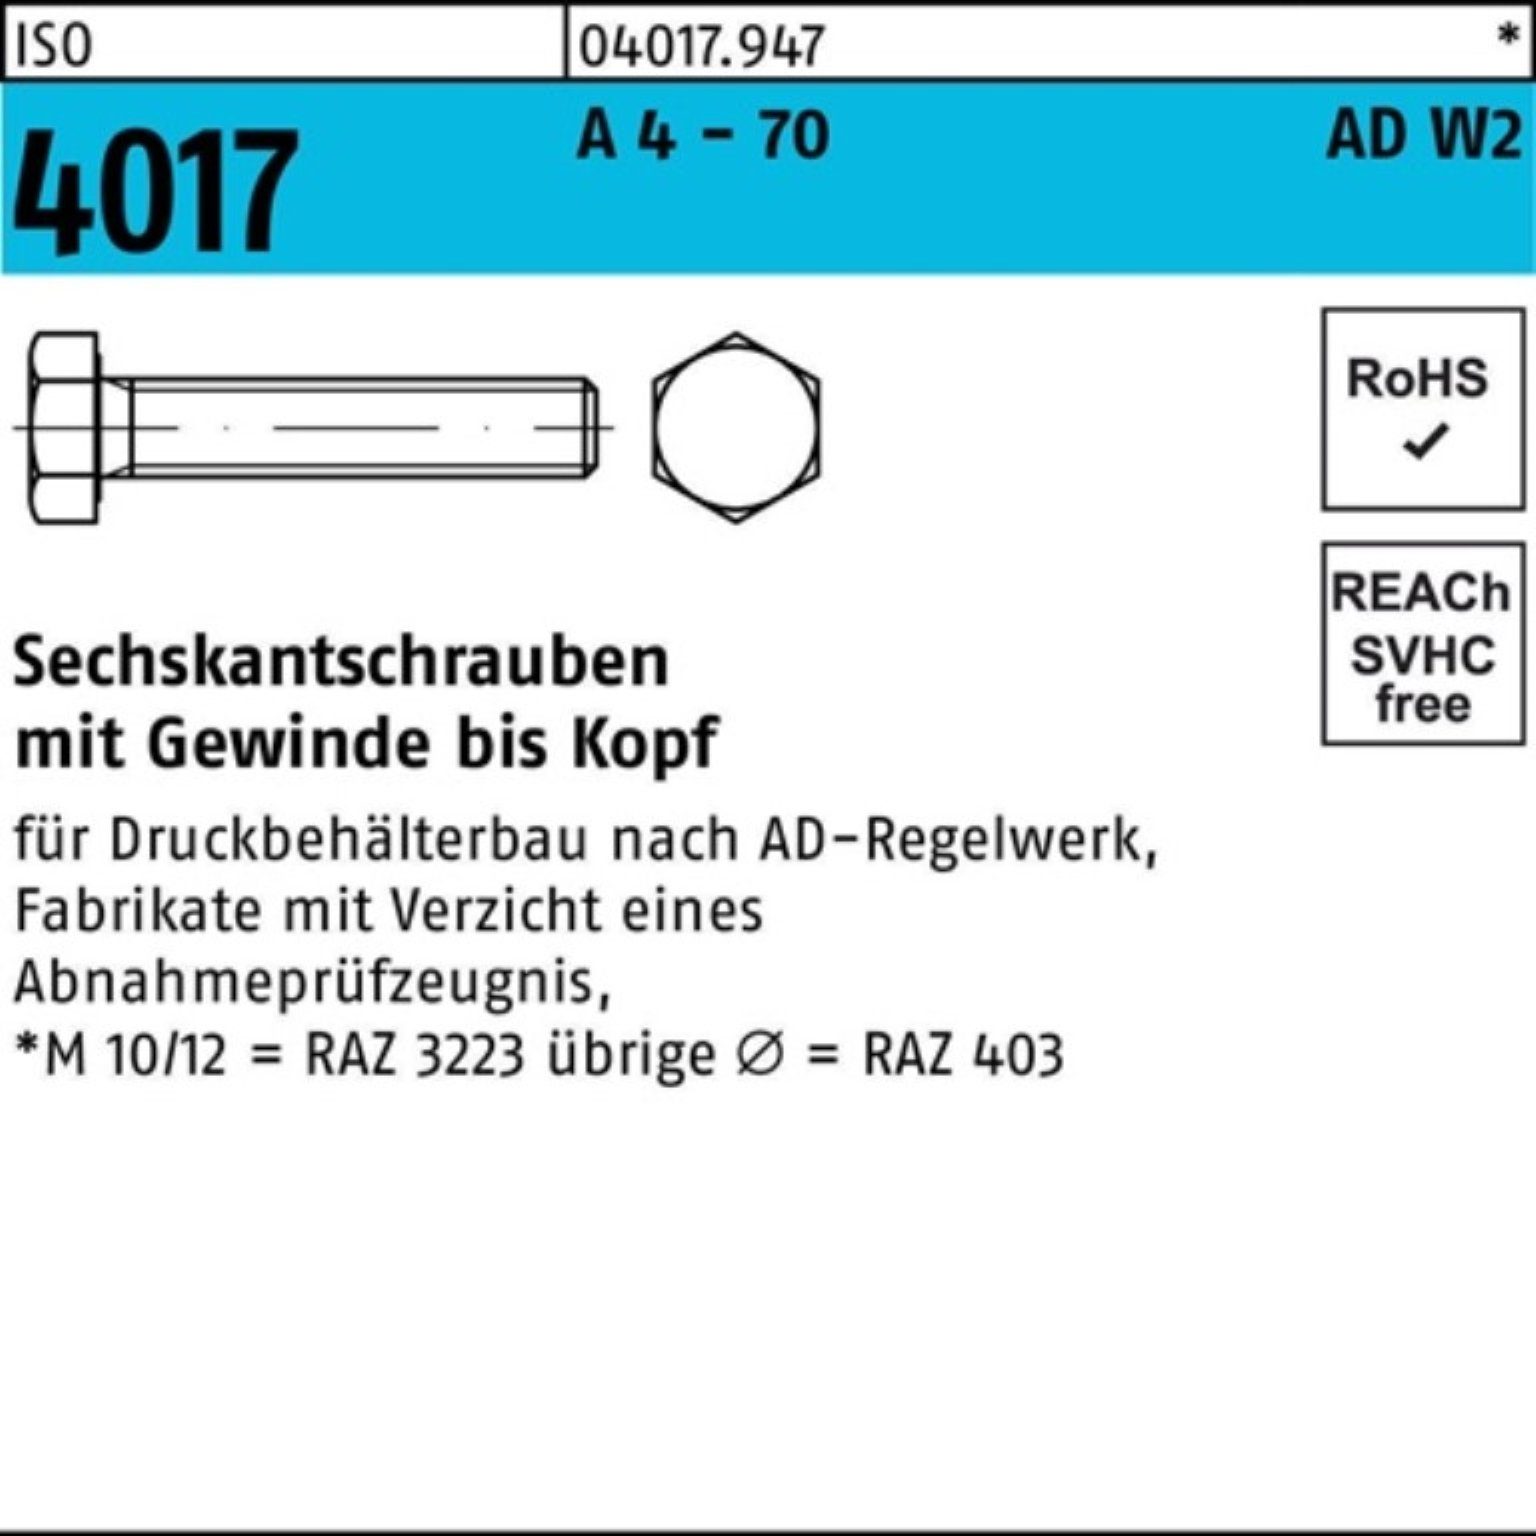 ISO Stü VG 200 70 Sechskantschraube 4 4017 - M6x AD-W2 Sechskantschraube Pack 8 A Bufab 200er